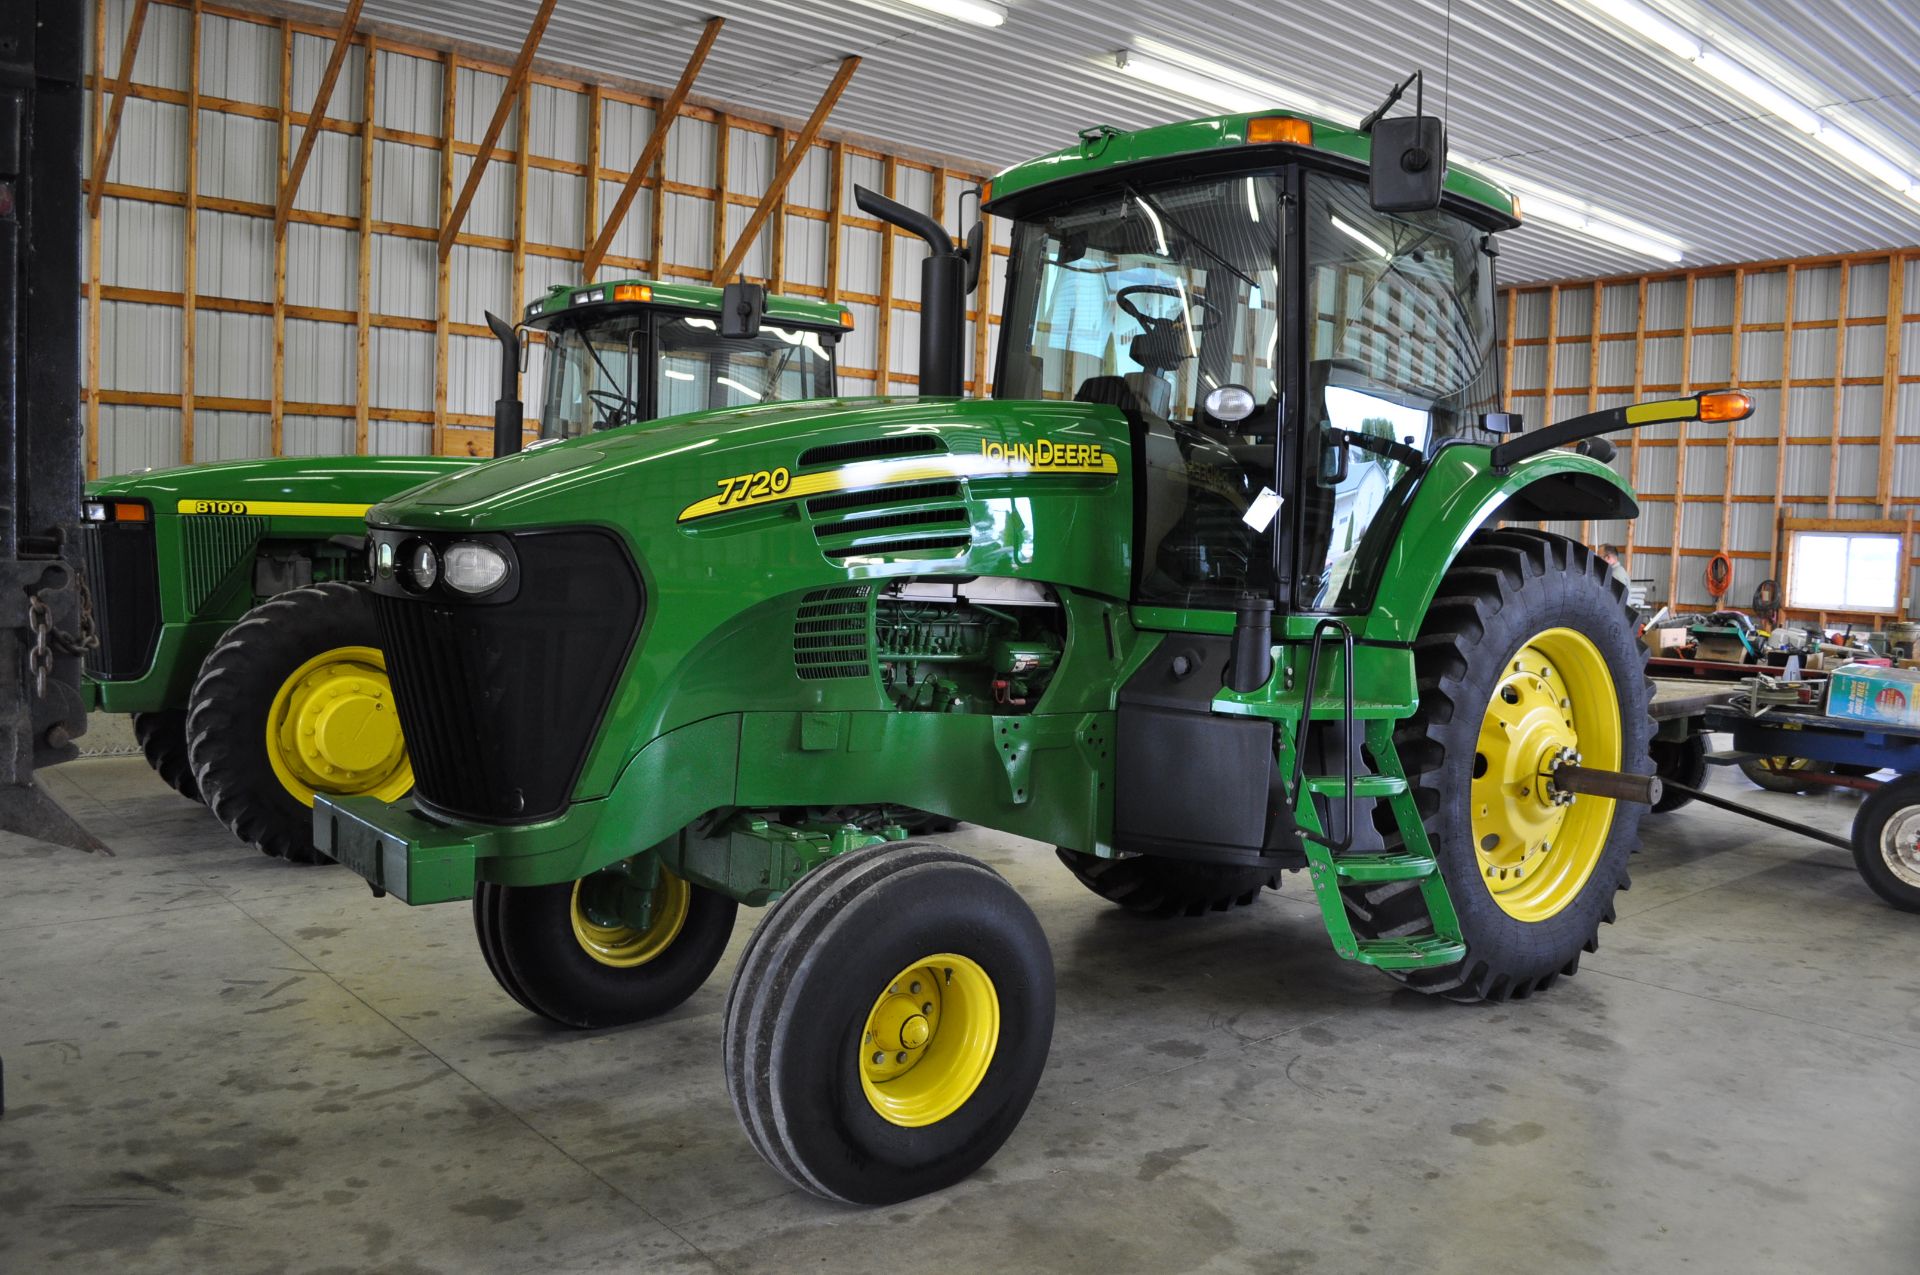 John Deere 7720 tractor, 480 / 80 R 42 rear, 14 L-16.1 tires, 3 hyd remotes, 3 pt